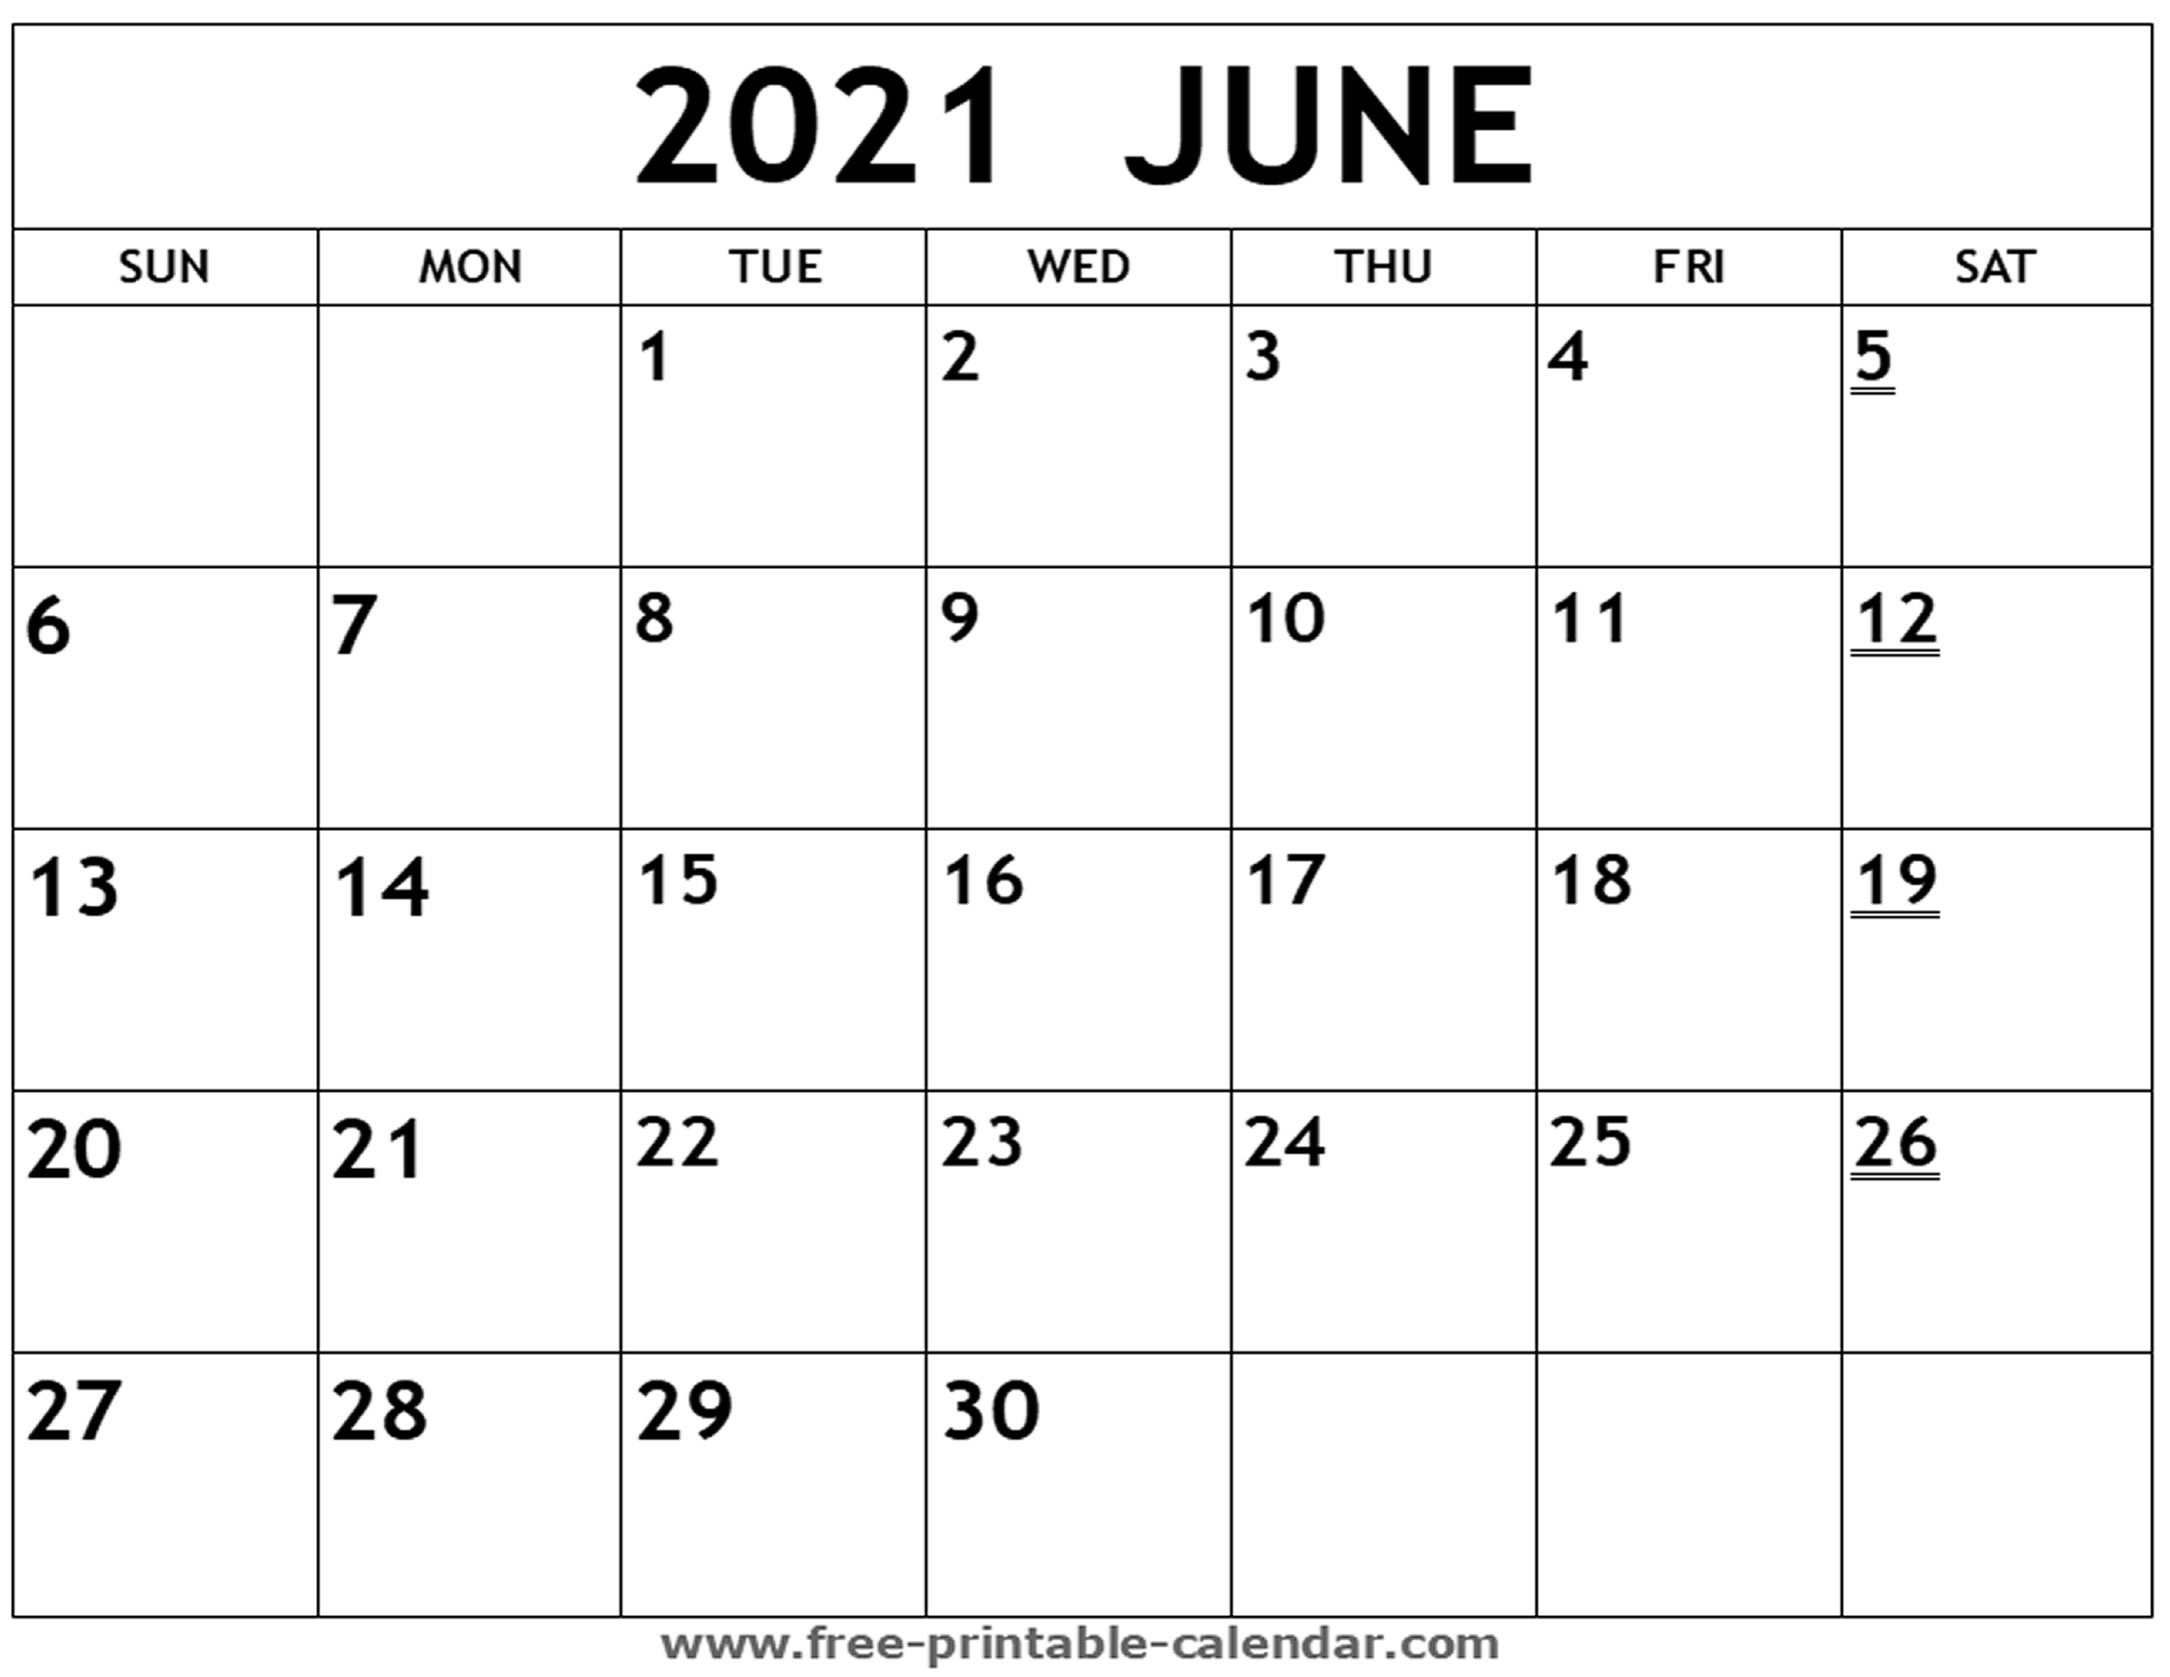 Printable 2021 June Calendar - Free-Printable-Calendar